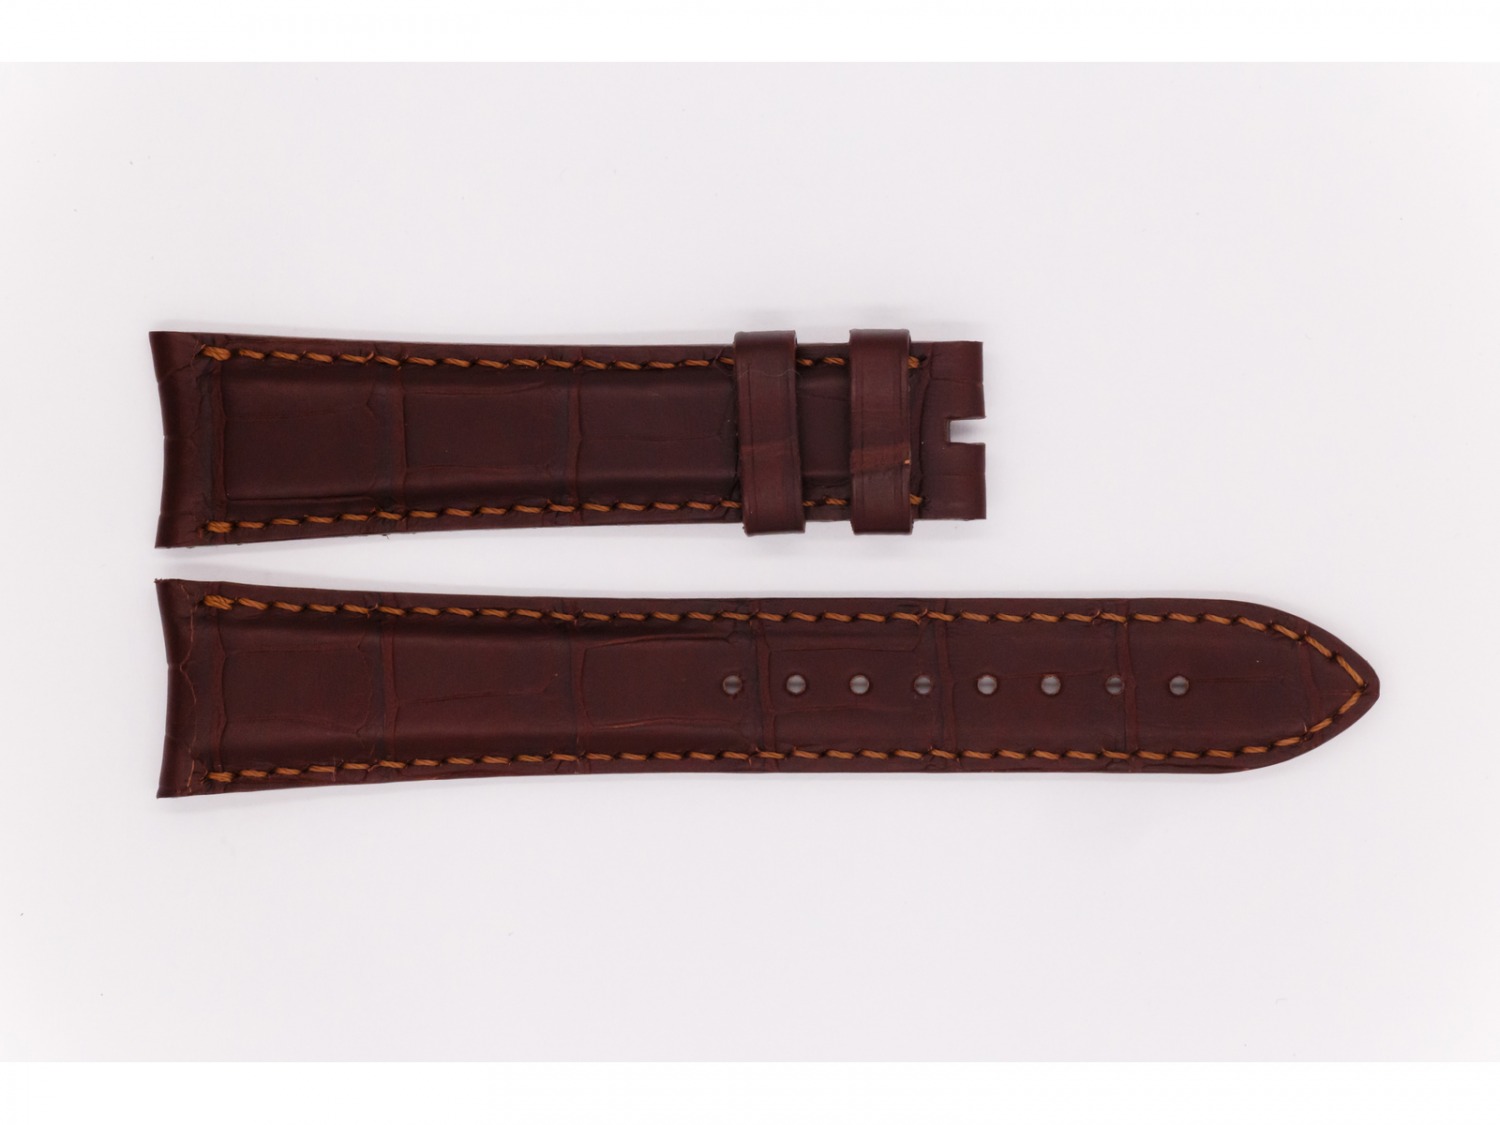 Leather Vacheron Constantin Strap 081167, brown